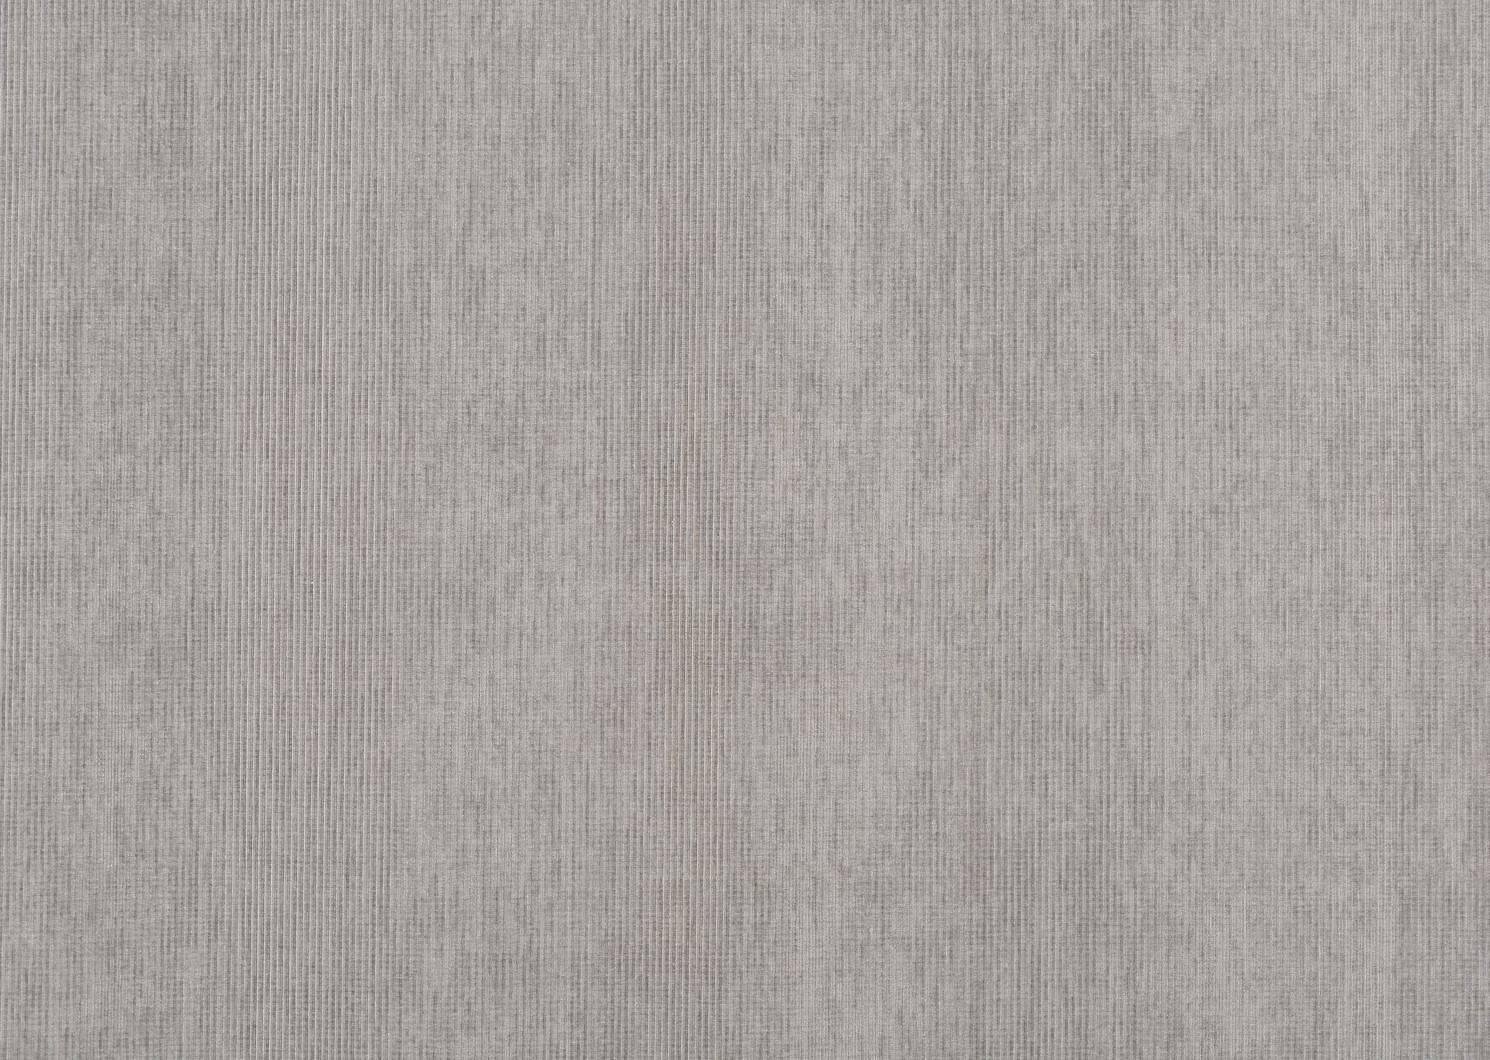 Marceline Panel 96 Silver Grey